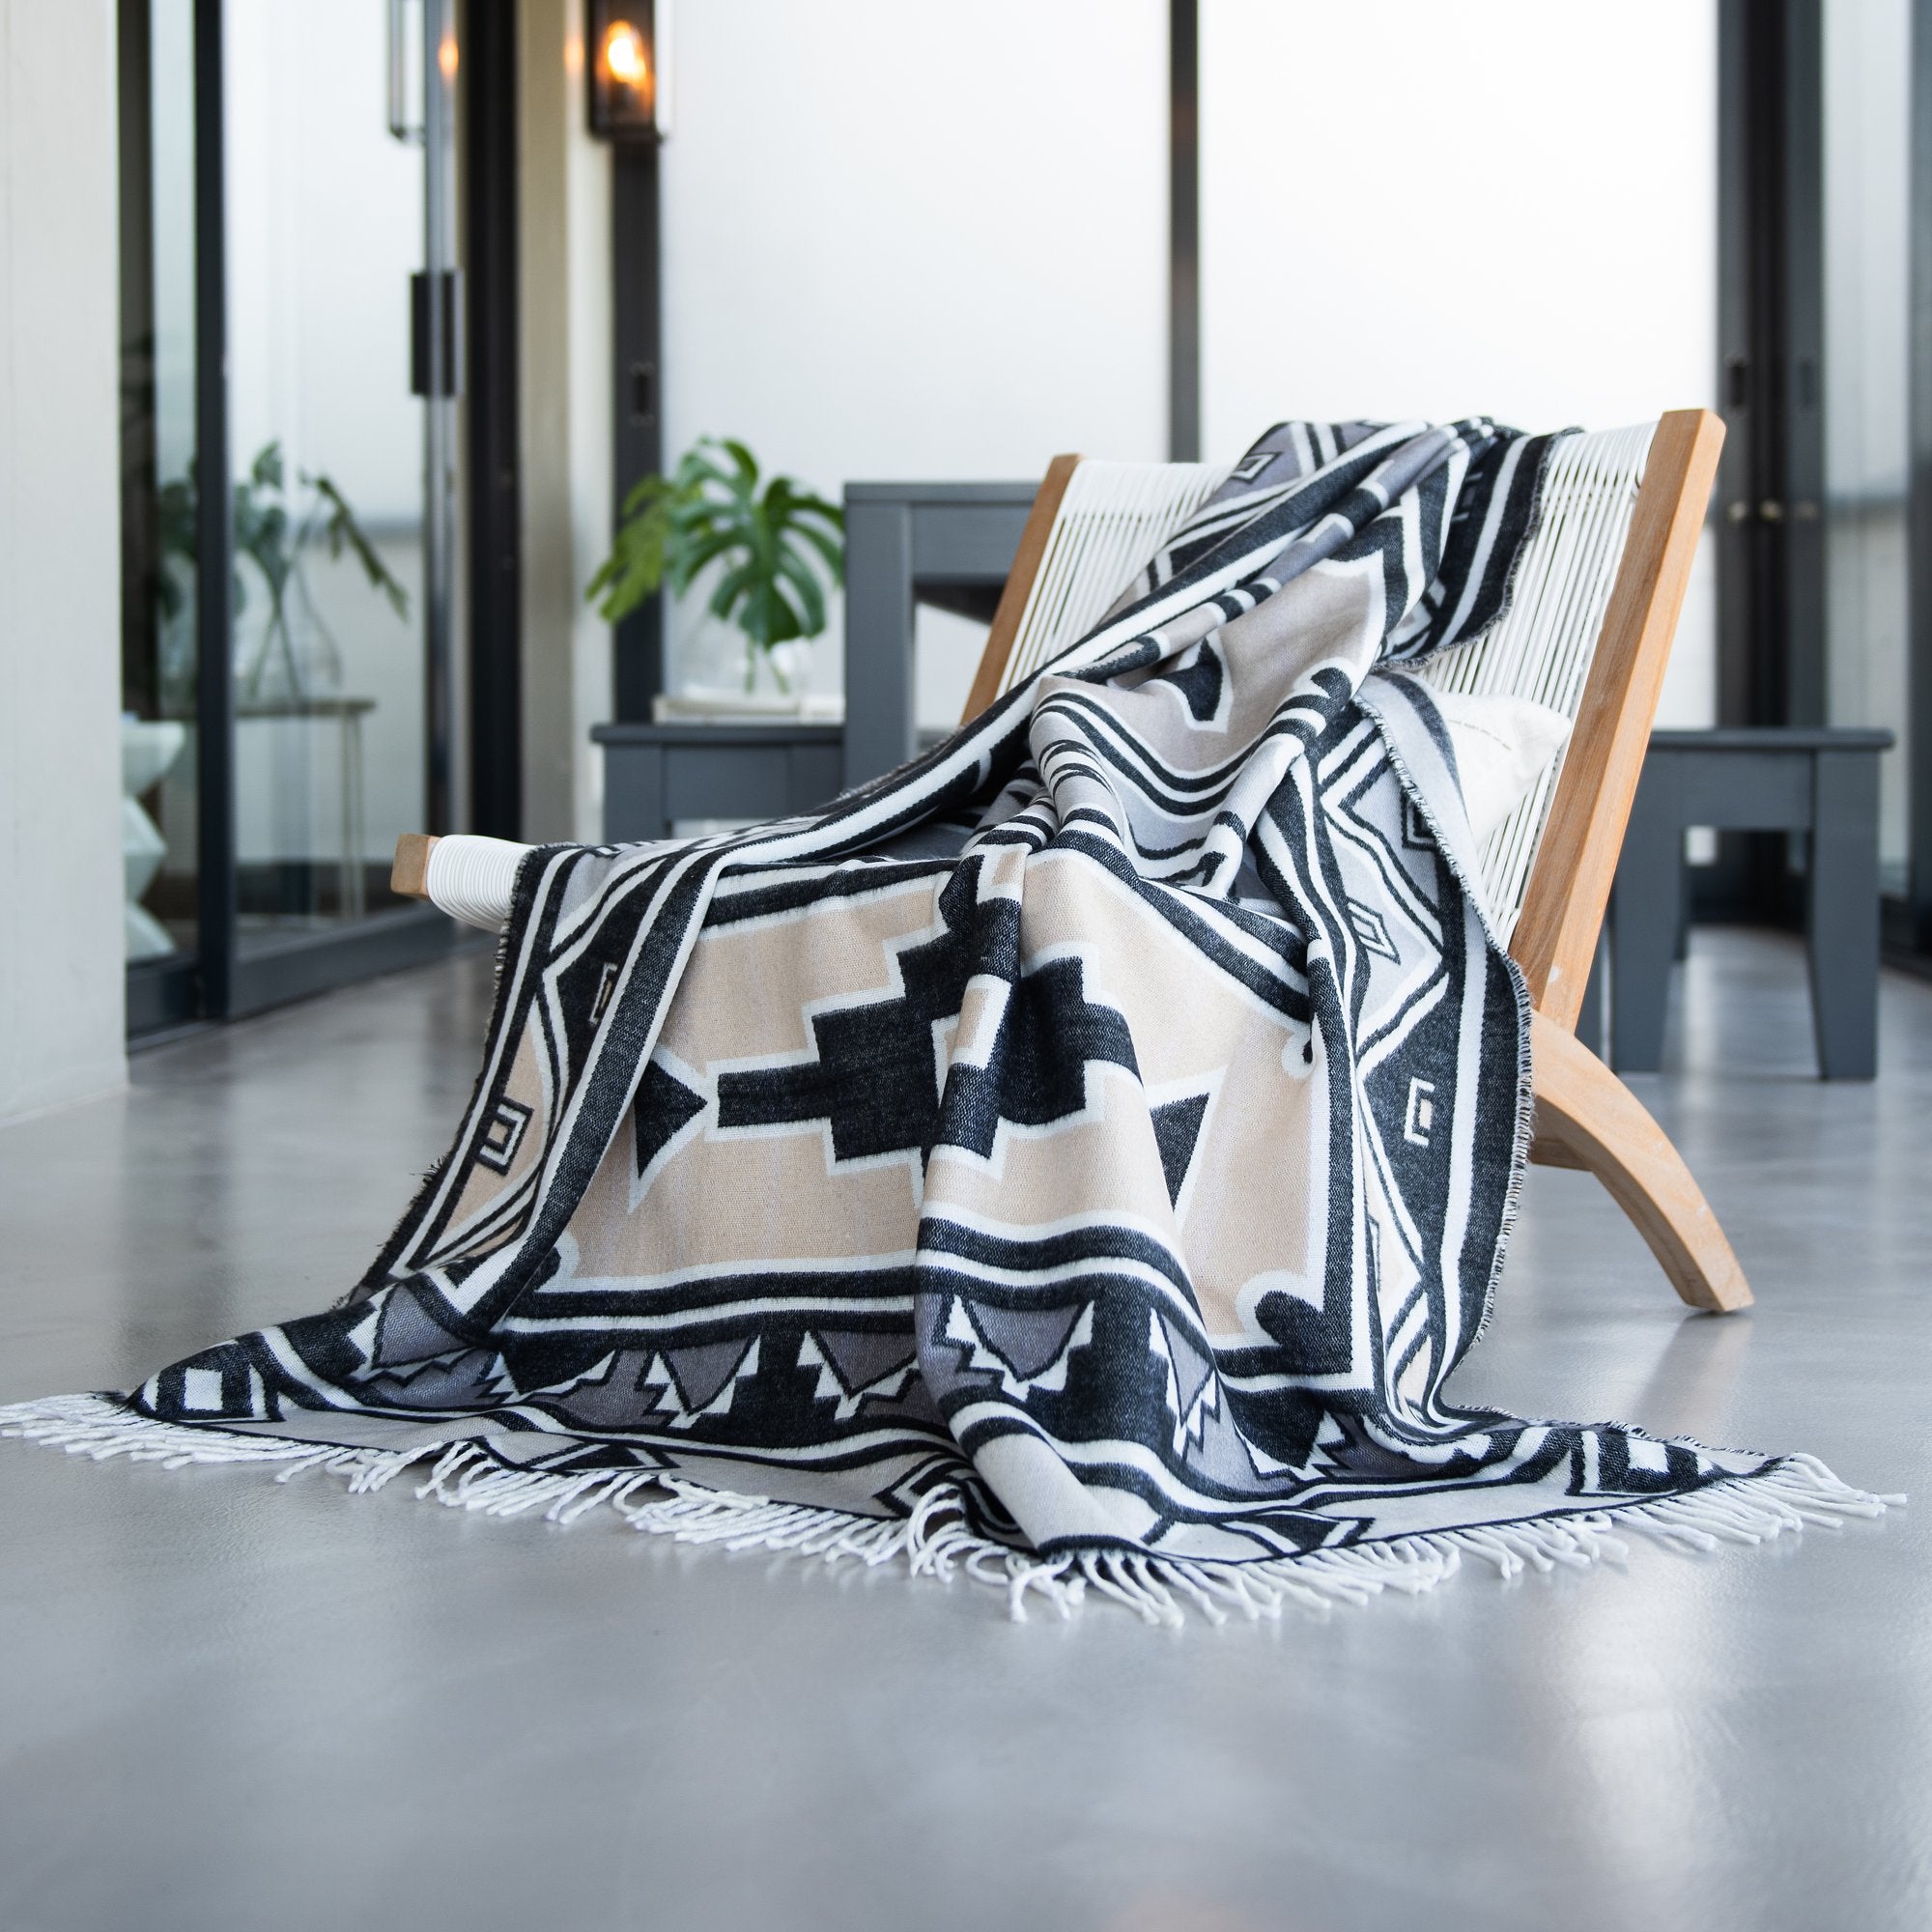 Cozy African blanket - Ndebele - 180 x 140 cm